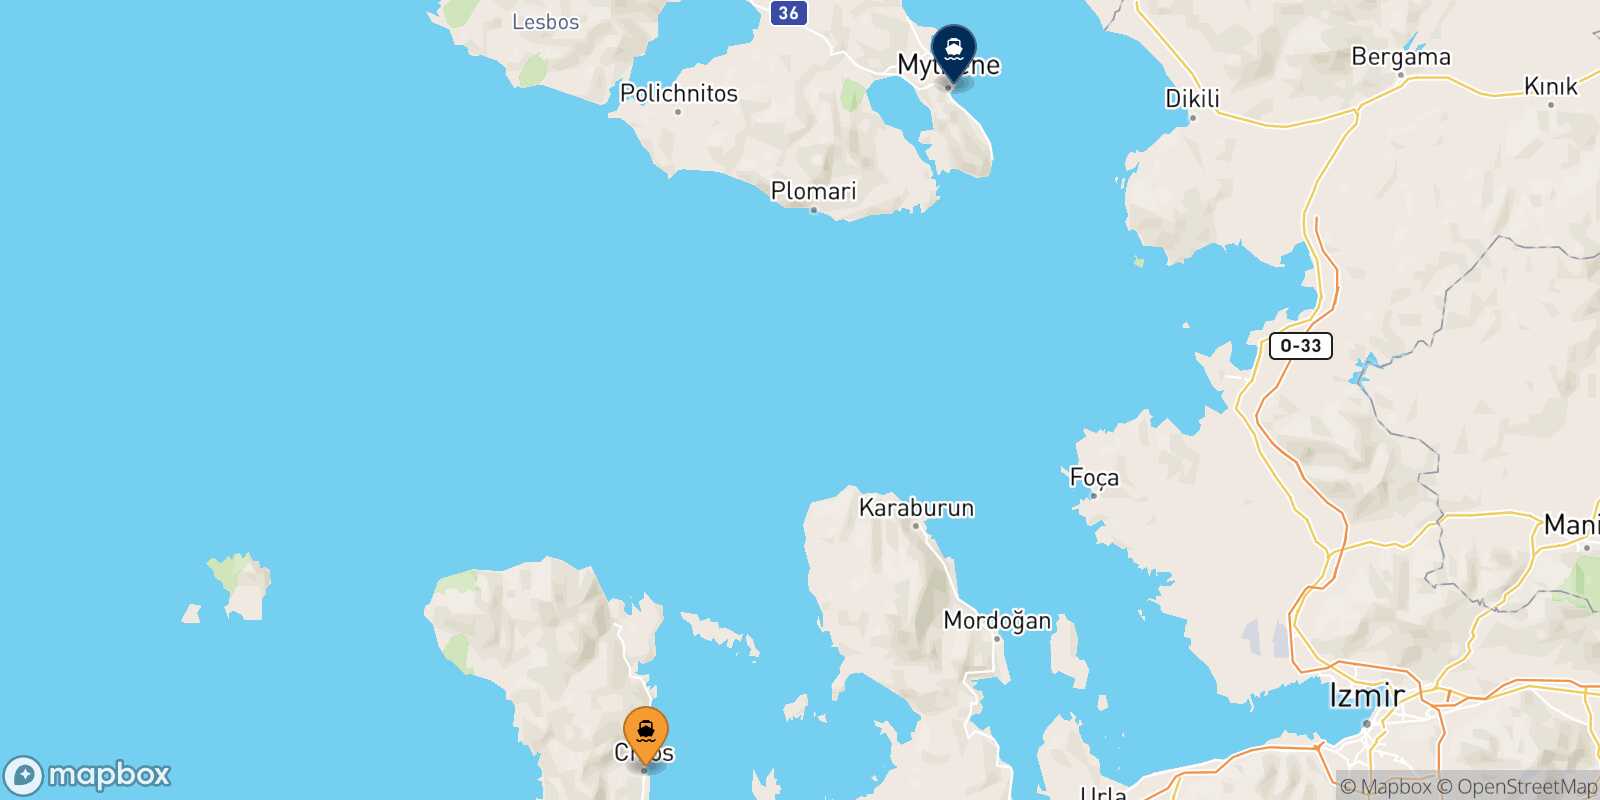 Mesta Chios Mytilene (Lesvos) route map